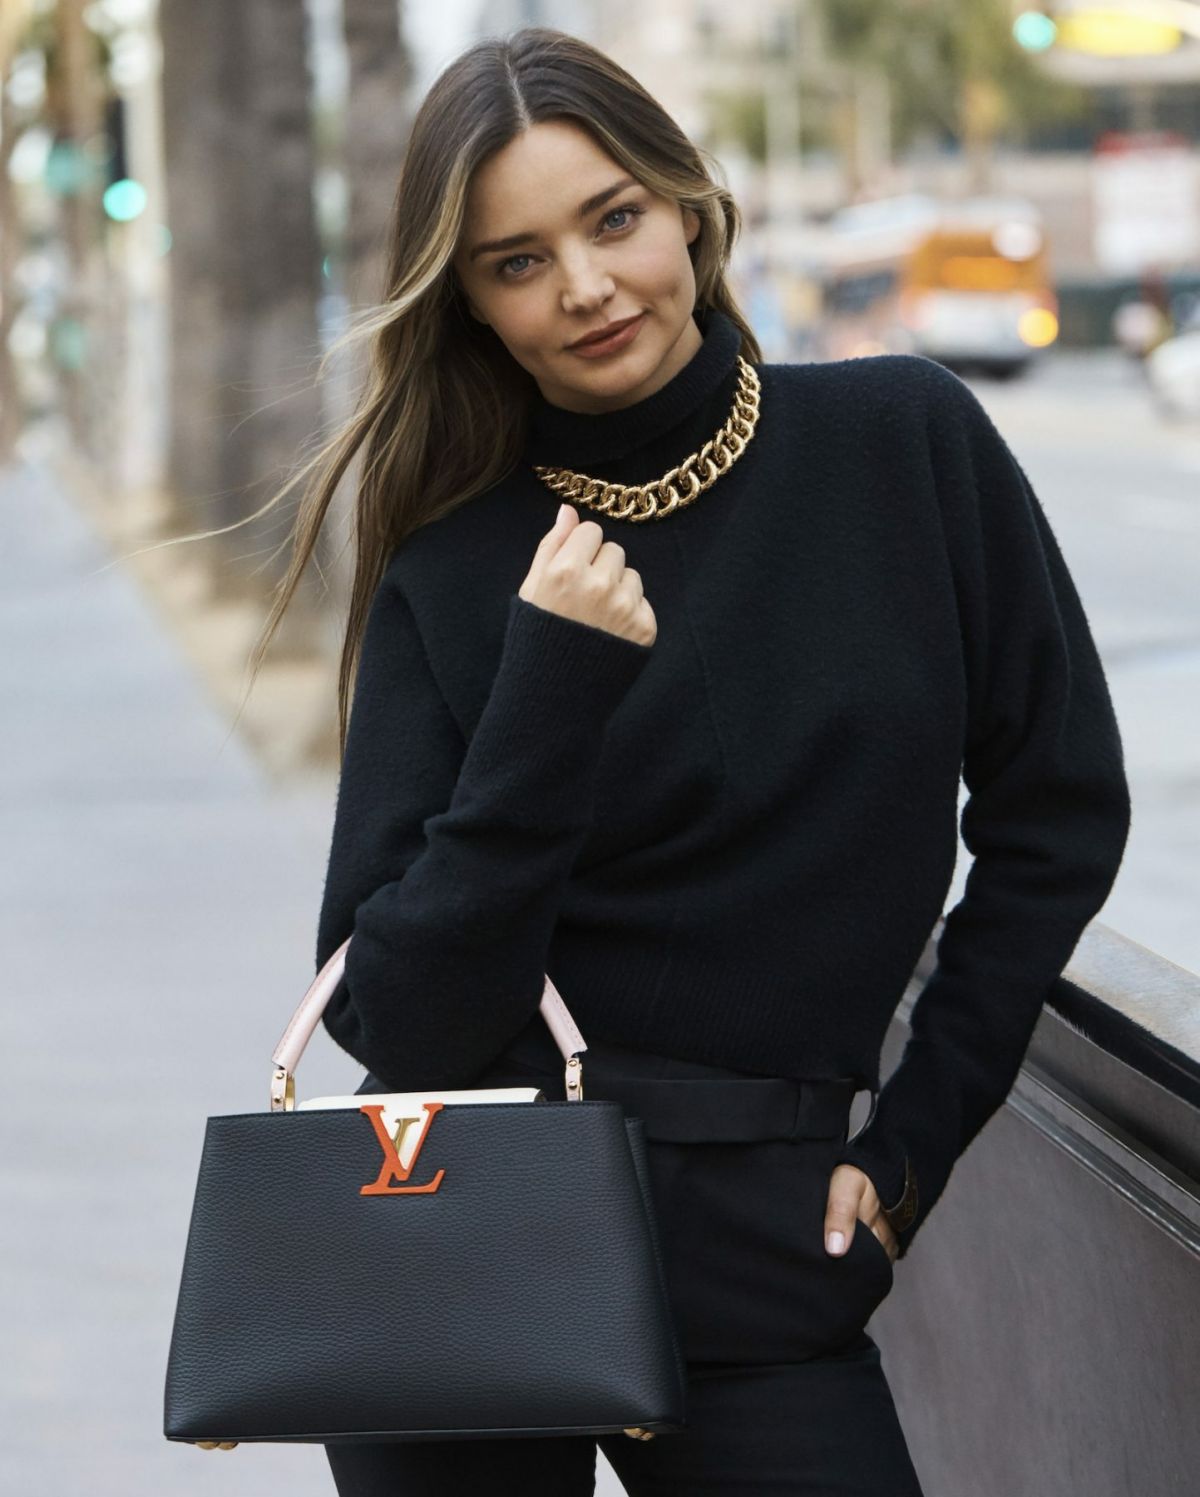 Louis Vuitton Capucines 2021 Handbag Campaign starring Miranda Kerr